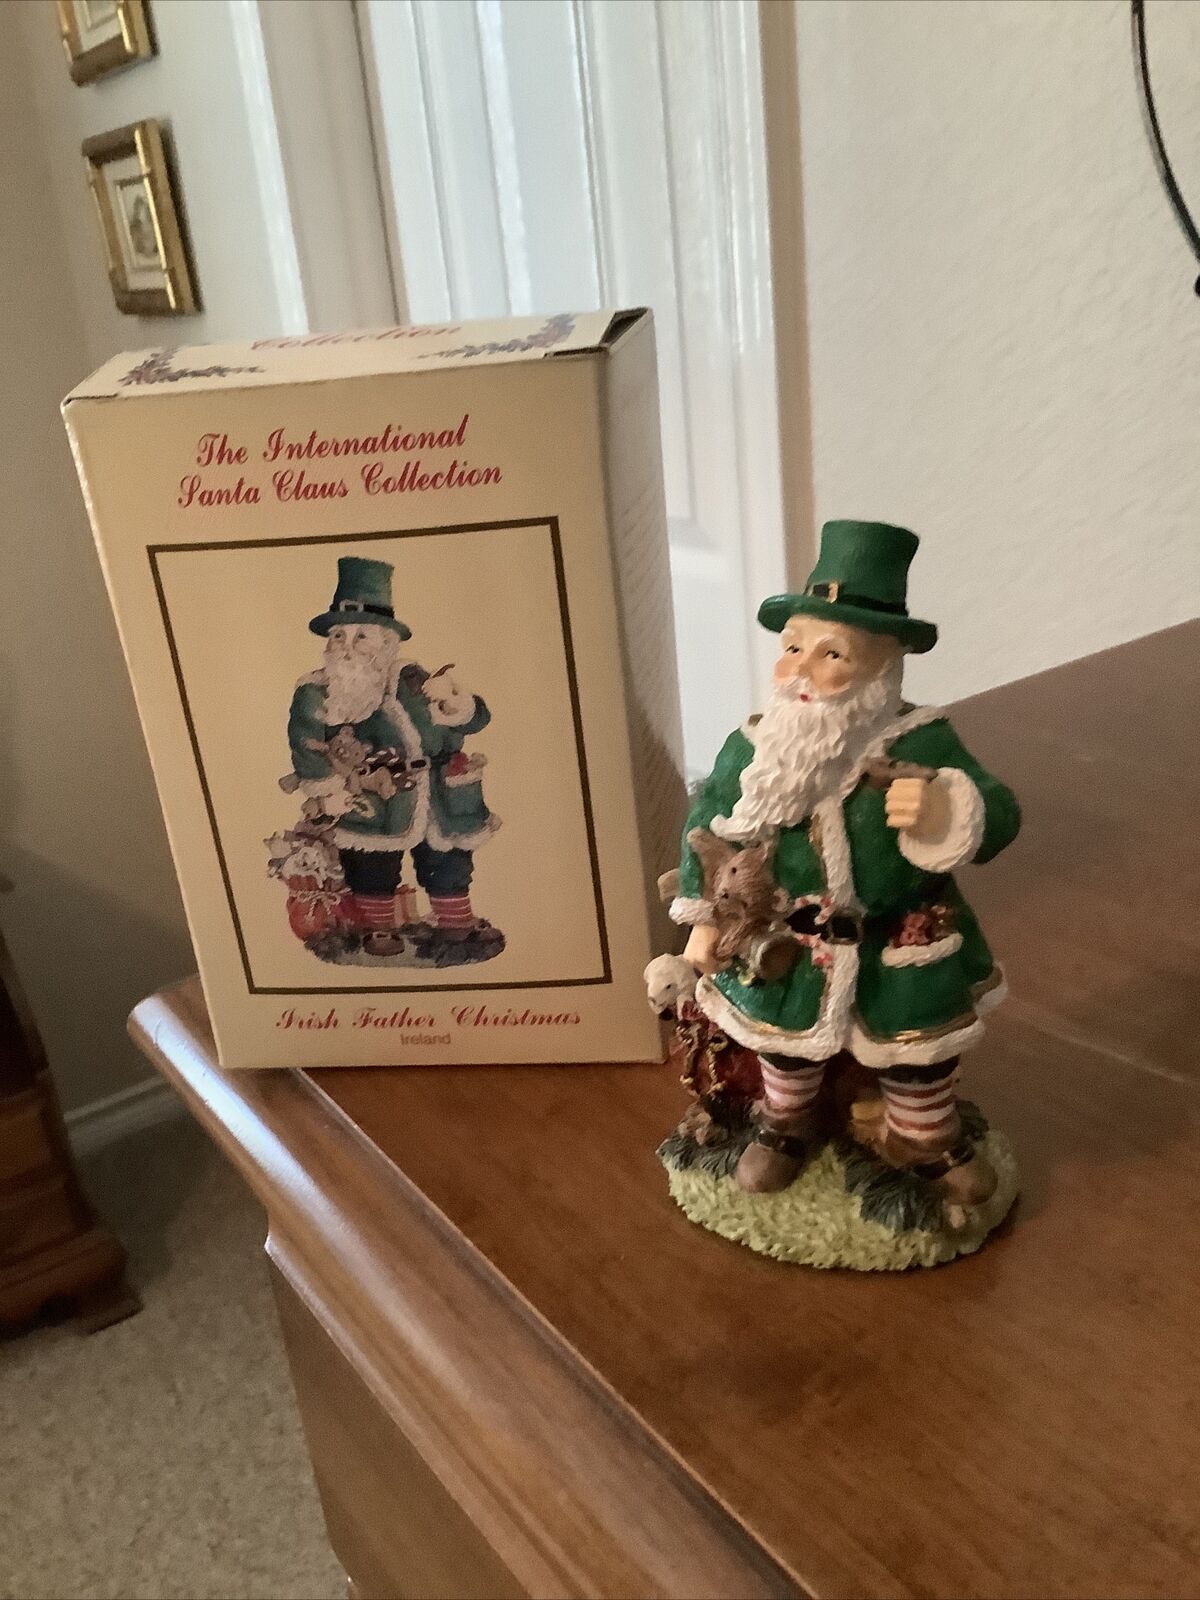 The International Santa Claus Collection, Irish Father Christmas Ireland 1995